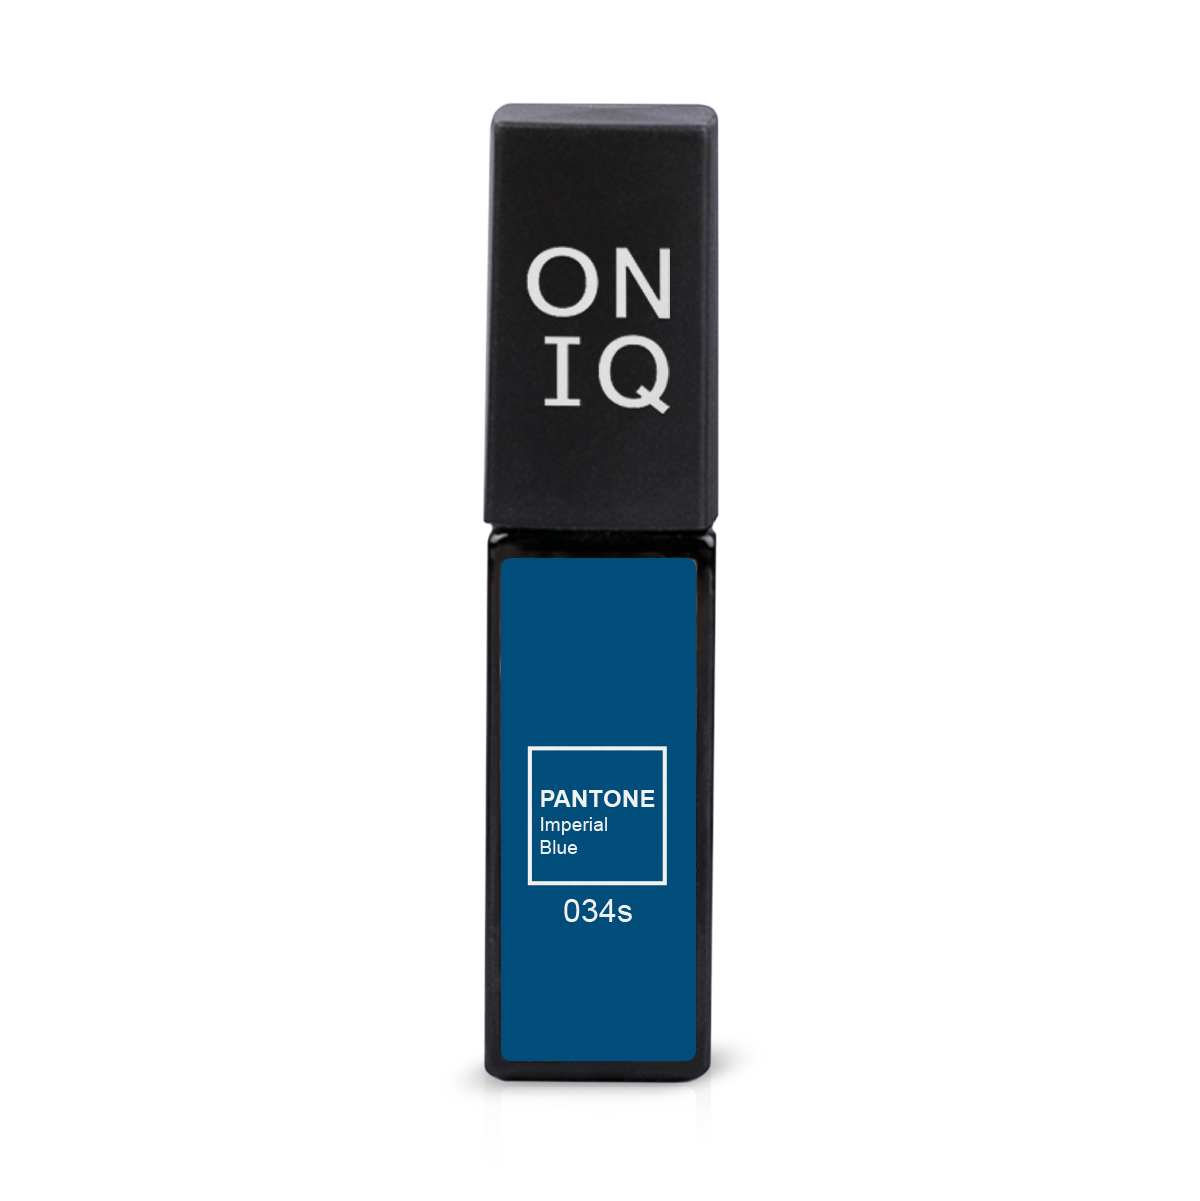 ONIQ Гель-лак для покрытия ногтей, Pantone: Imperial blue, 6